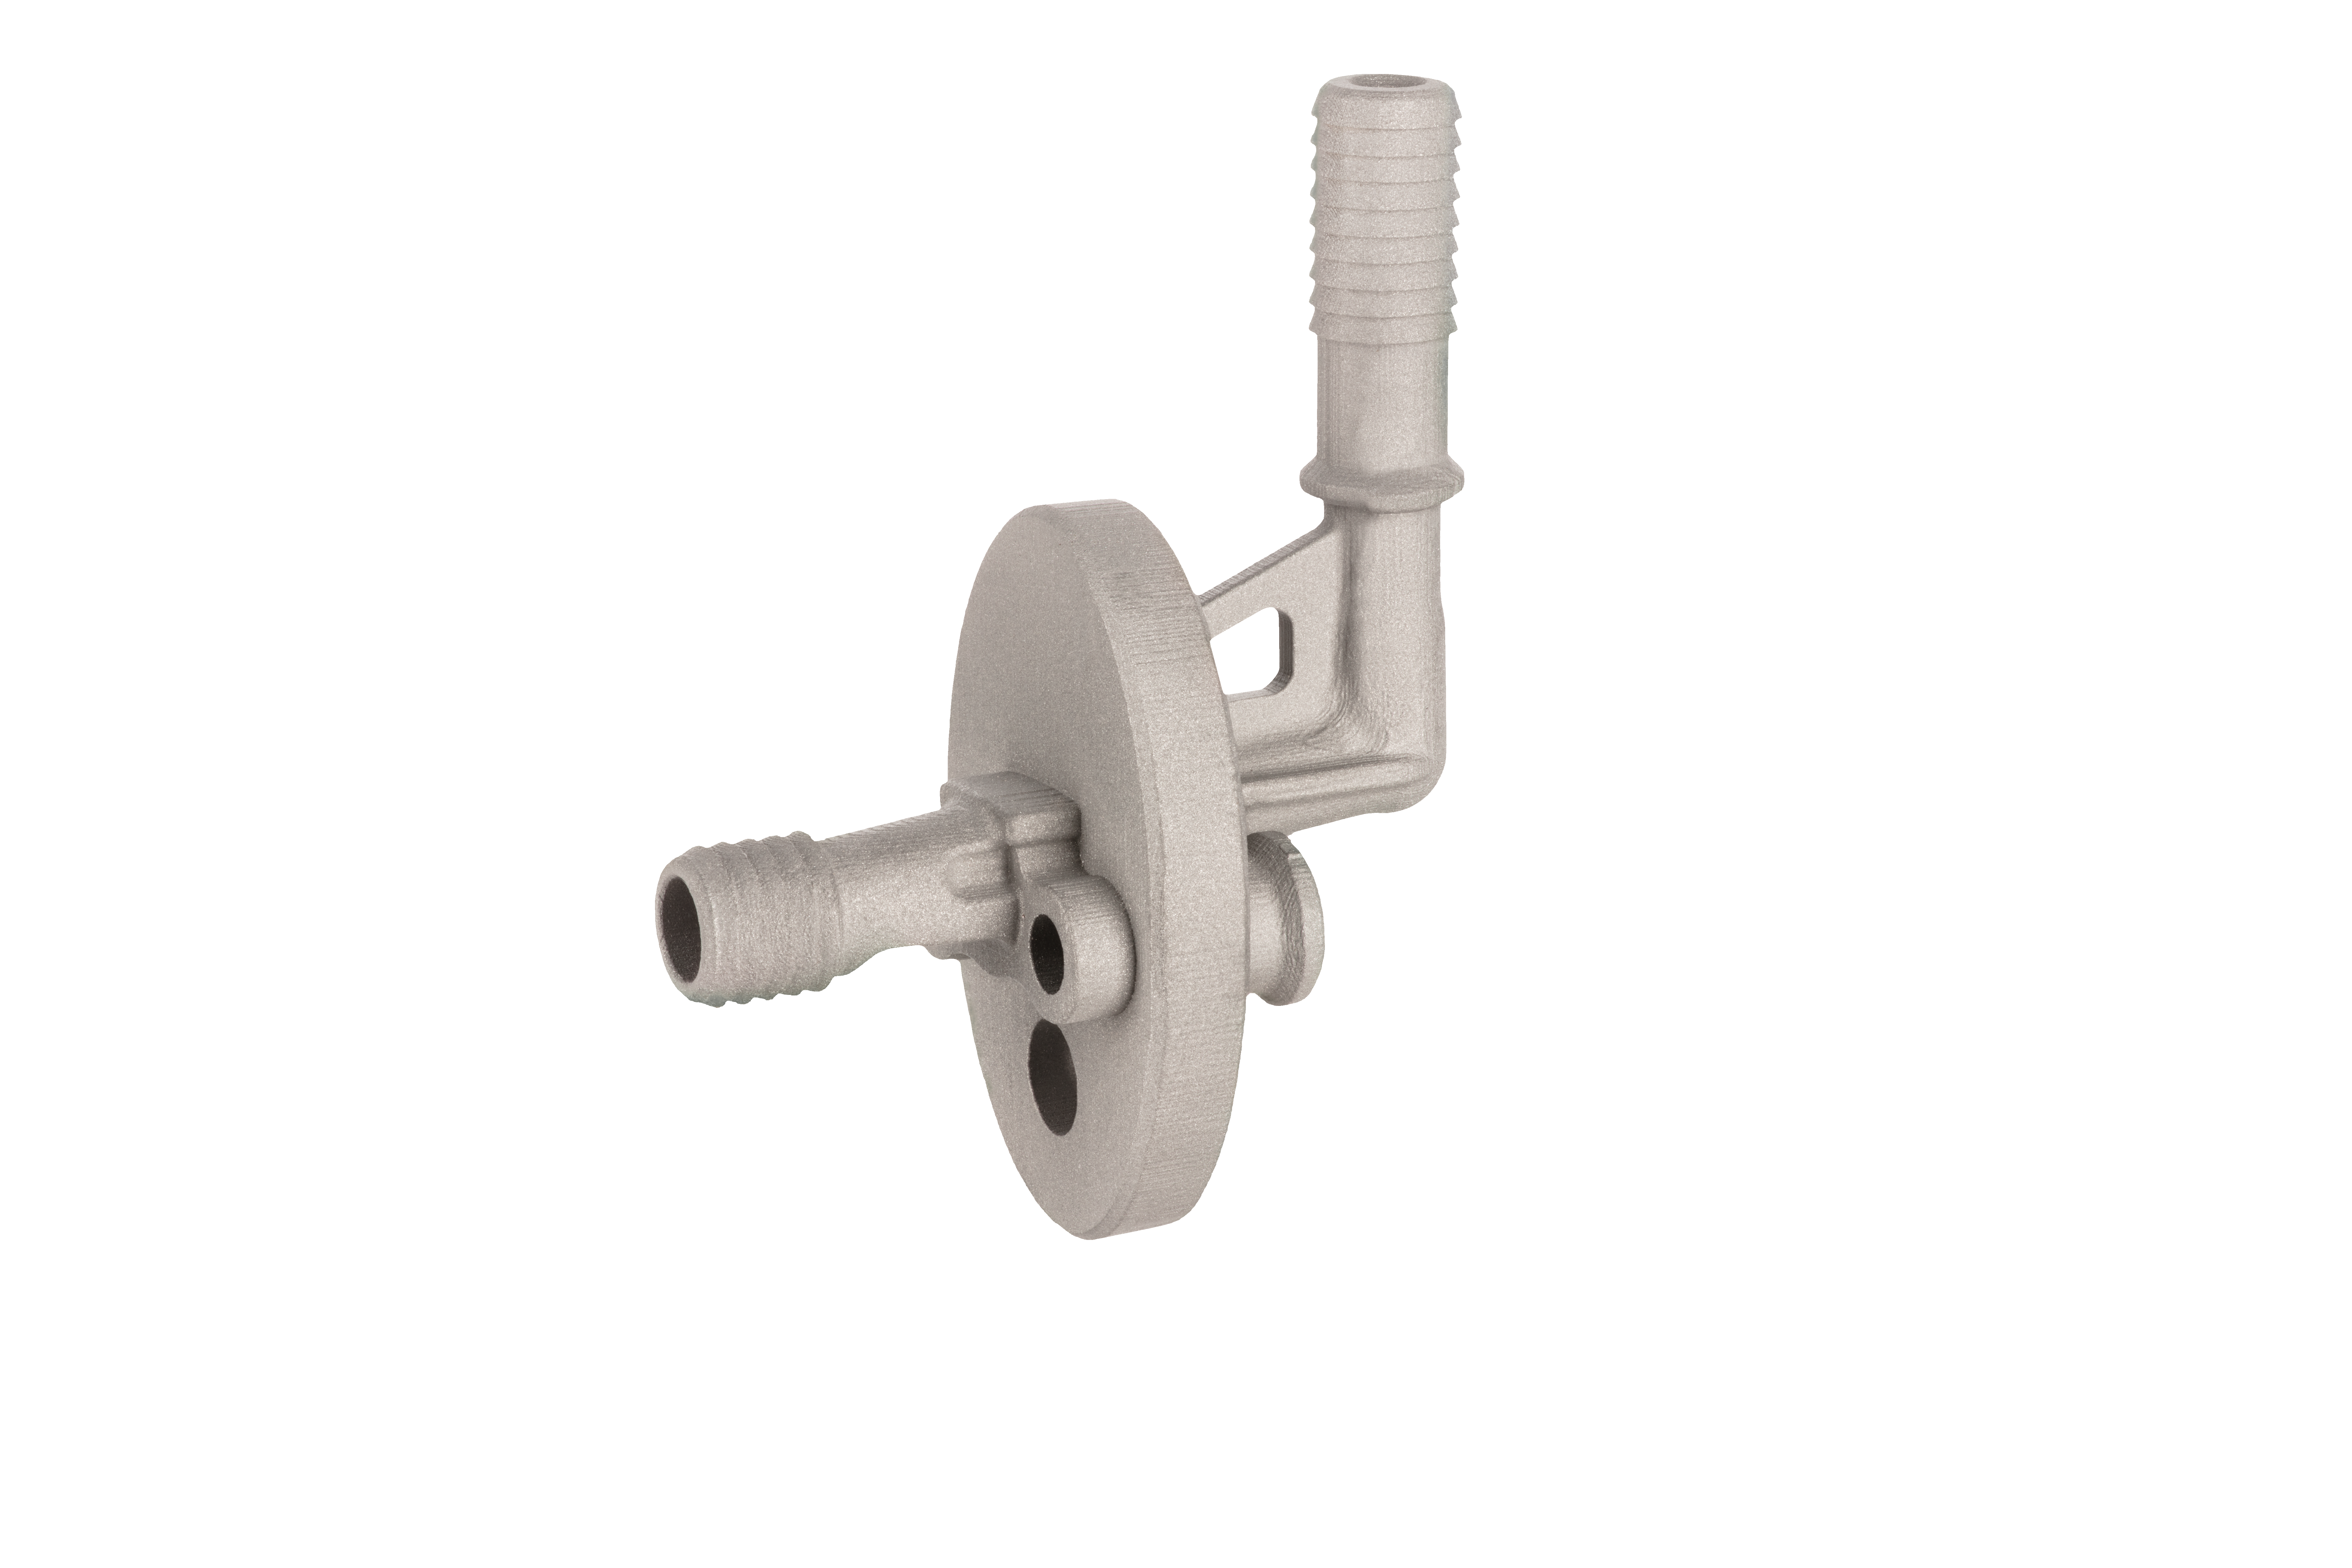 3D printed fluid connector